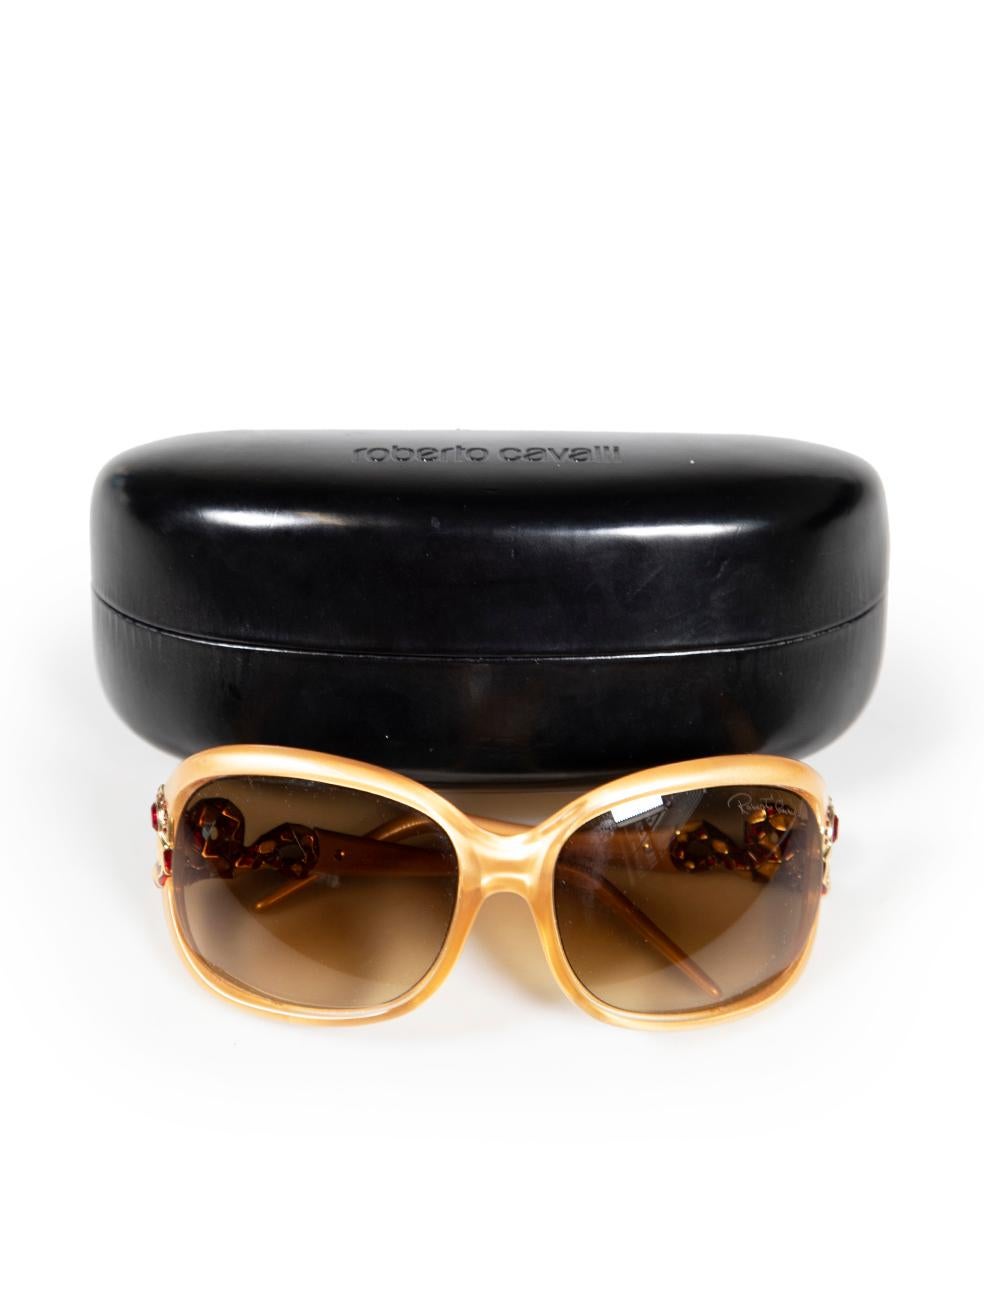 Roberto Cavalli Gold Embellished Sunglasses For Sale 2